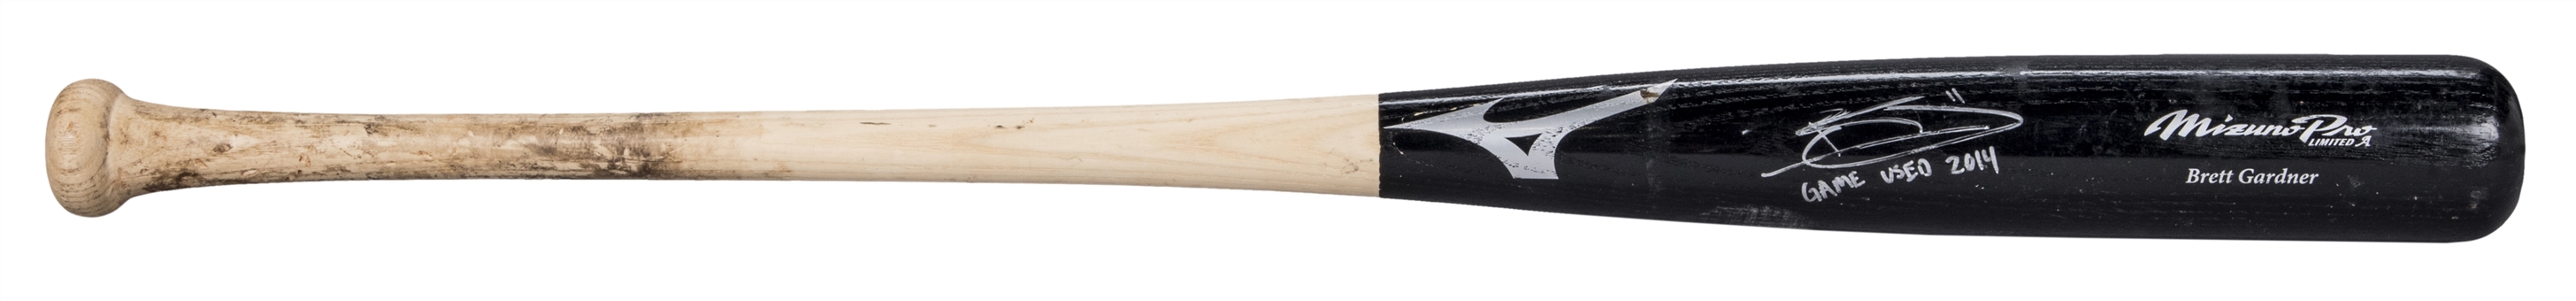 2014 Brett Gardner Game Used and Signed Mizuno Pro Model Bat (PSA/DNA GU 9 & Beckett) 